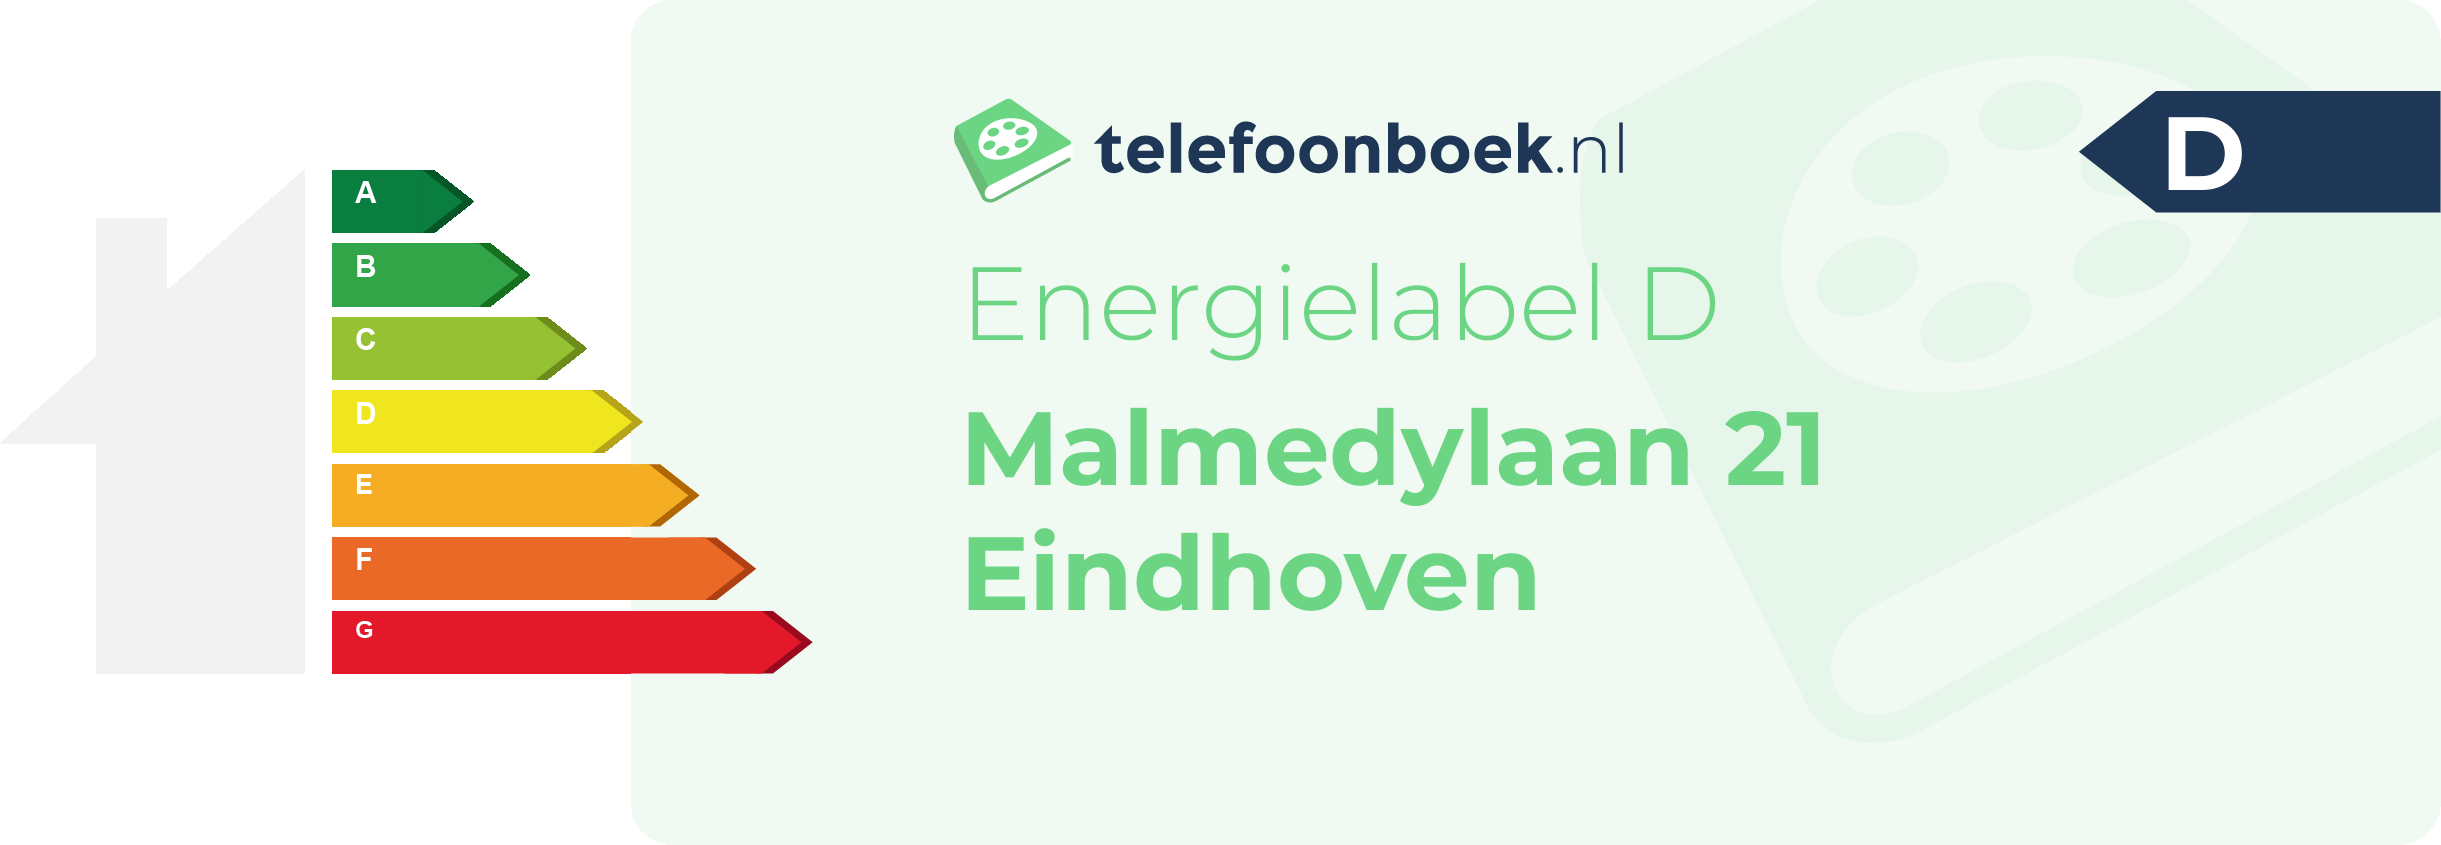 Energielabel Malmedylaan 21 Eindhoven